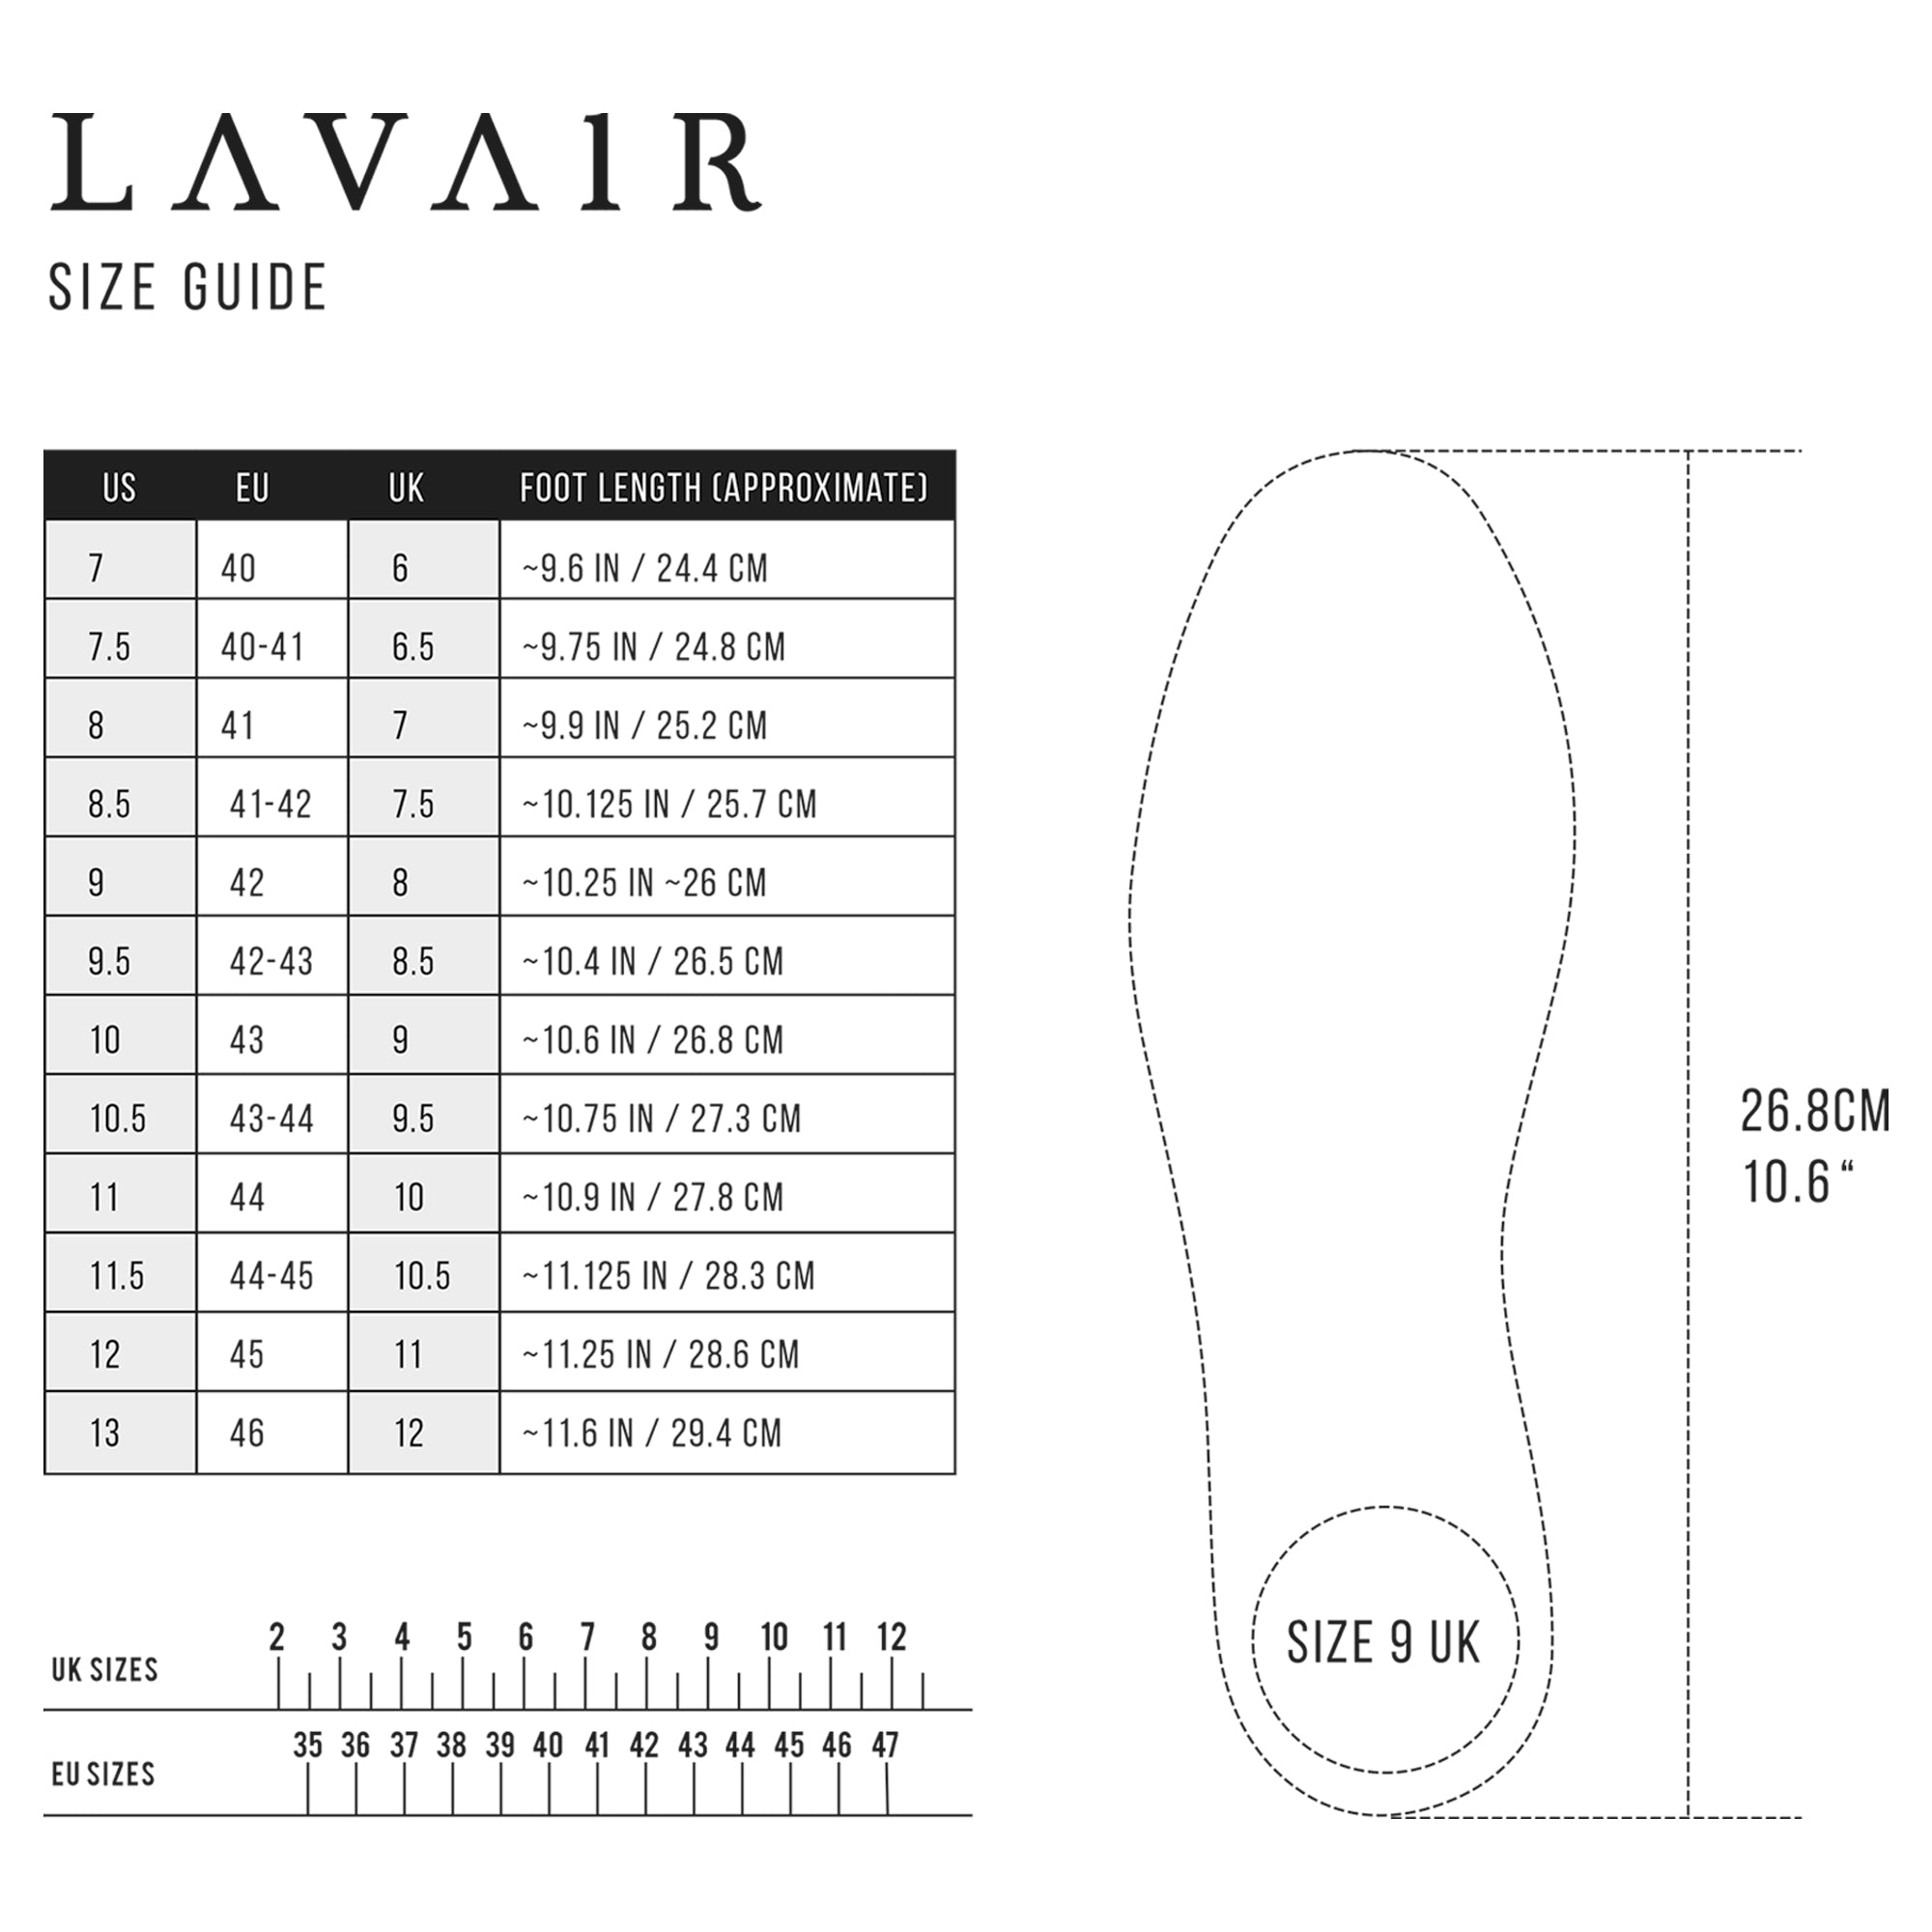 Shoe Size Guide – Lavair Brand